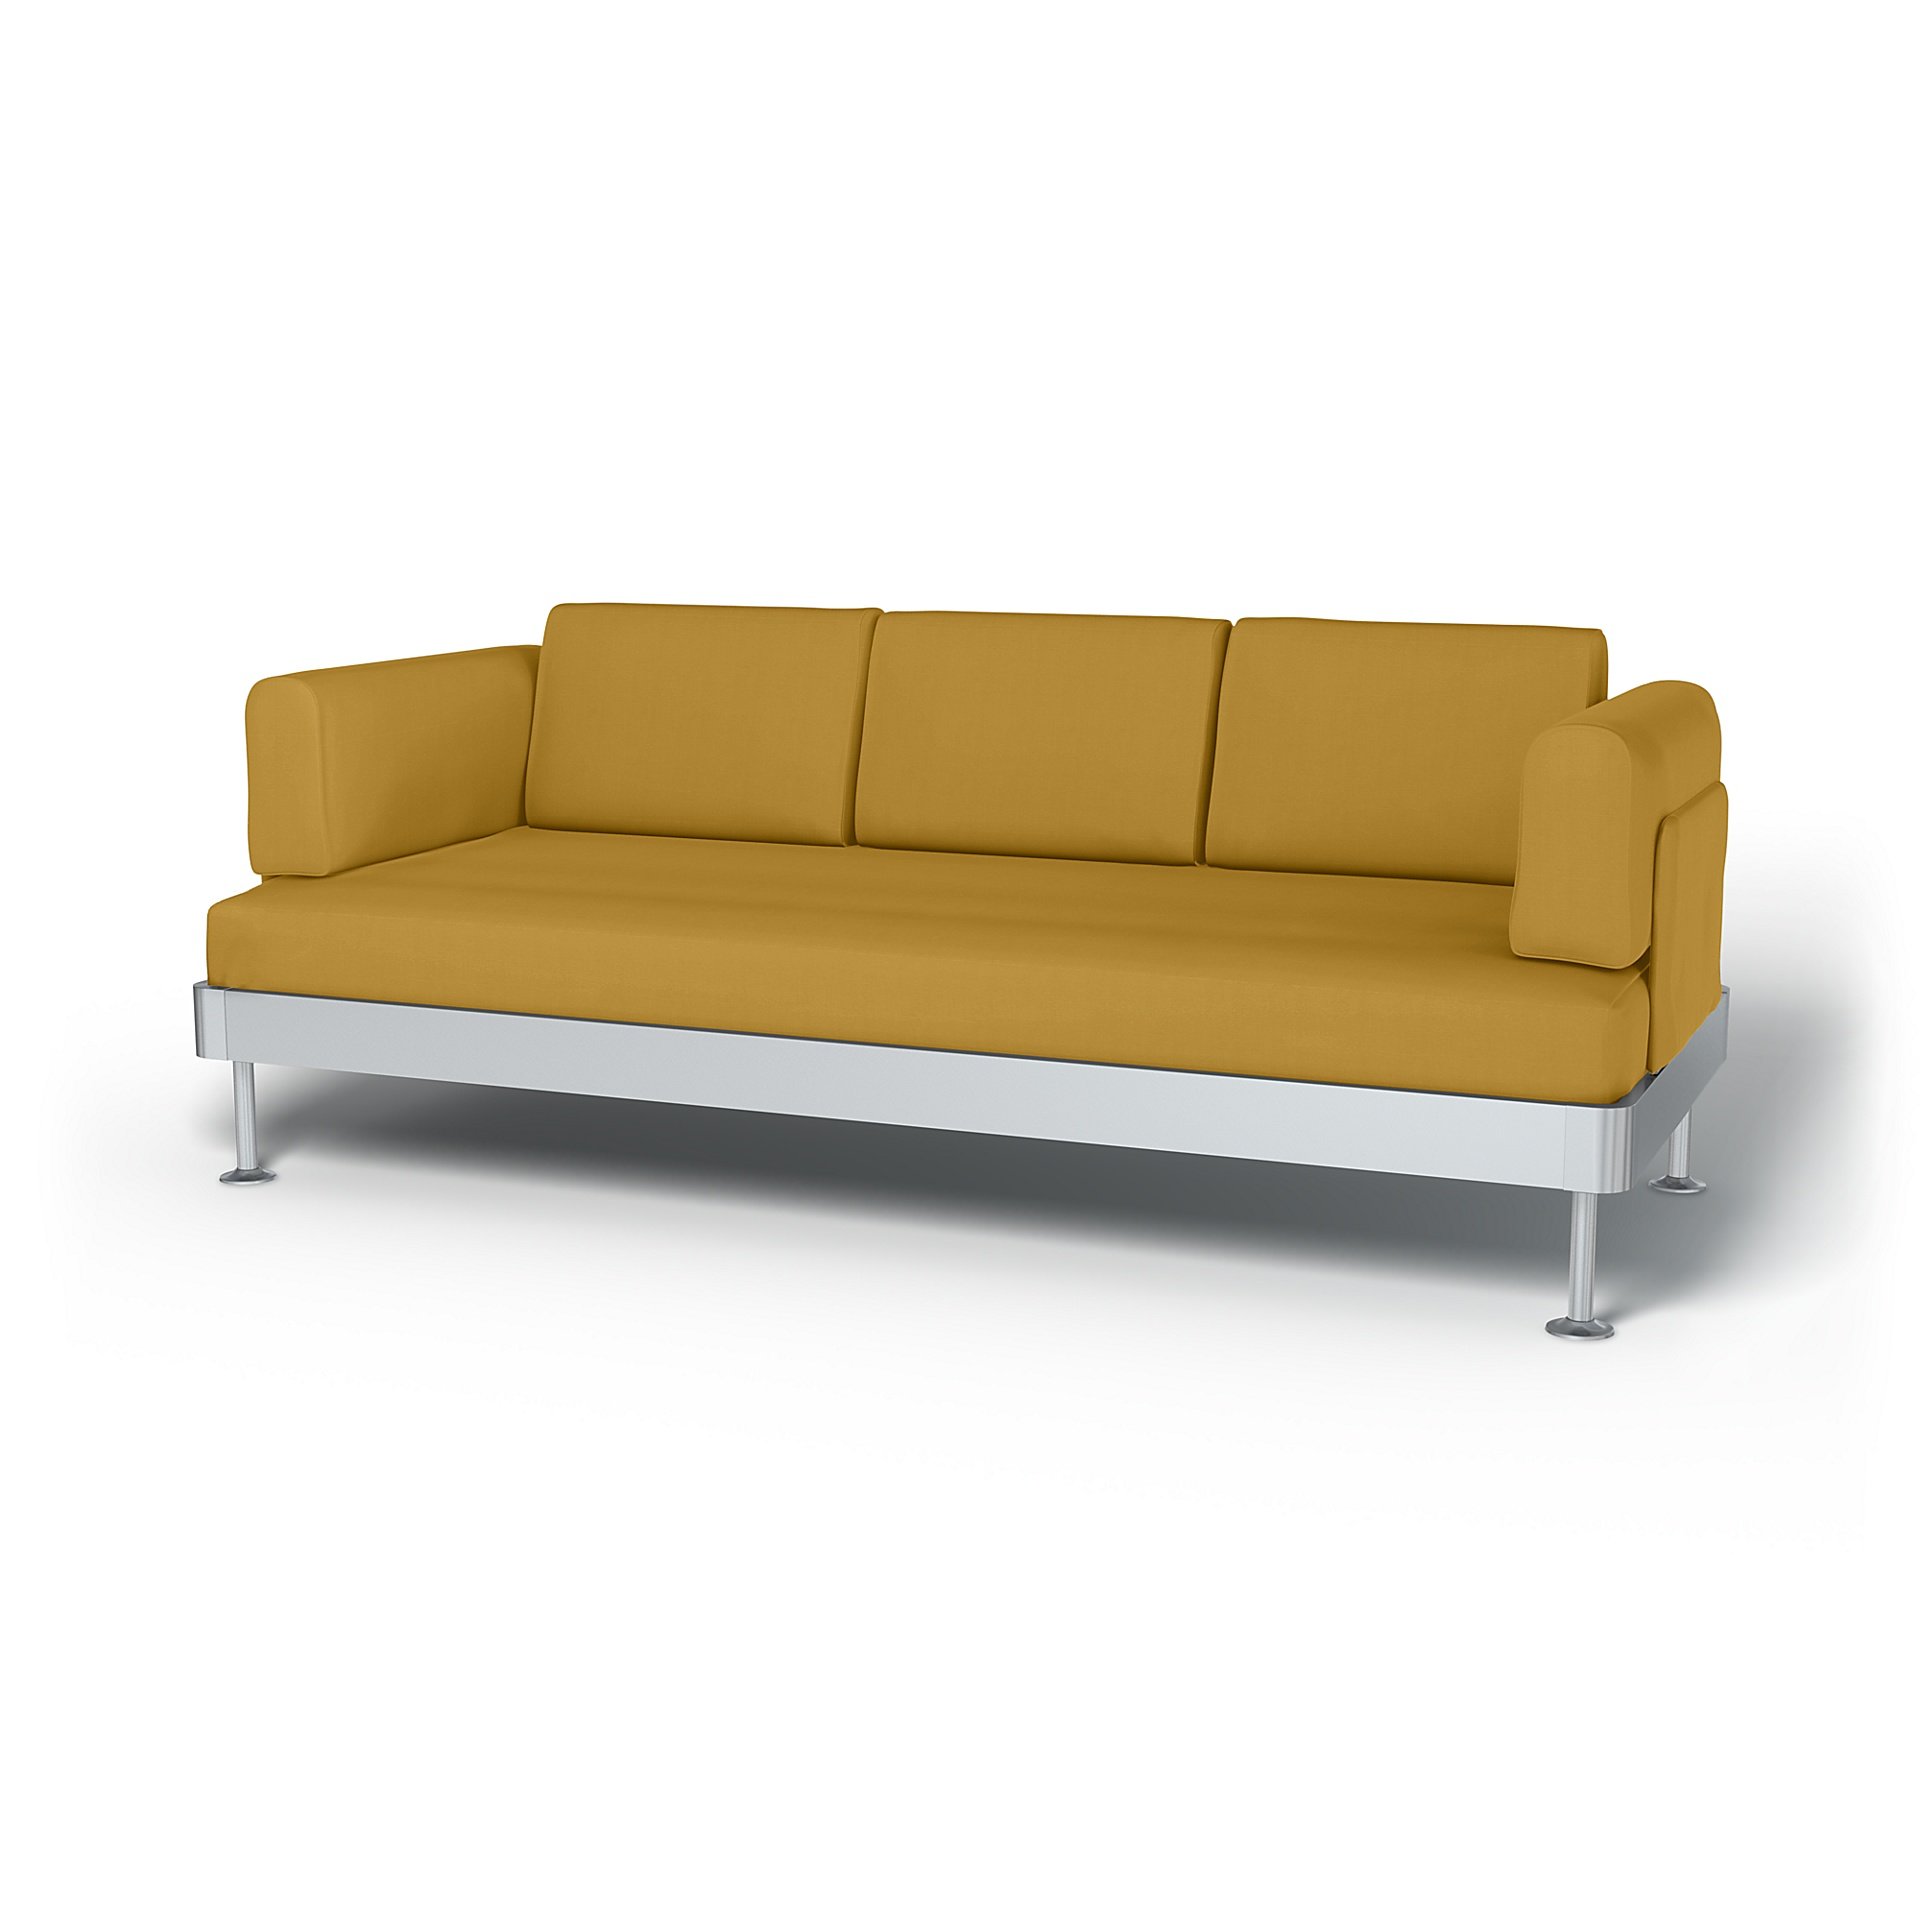 IKEA - Delaktig 3 Seater Sofa Cover, Honey Mustard, Cotton - Bemz